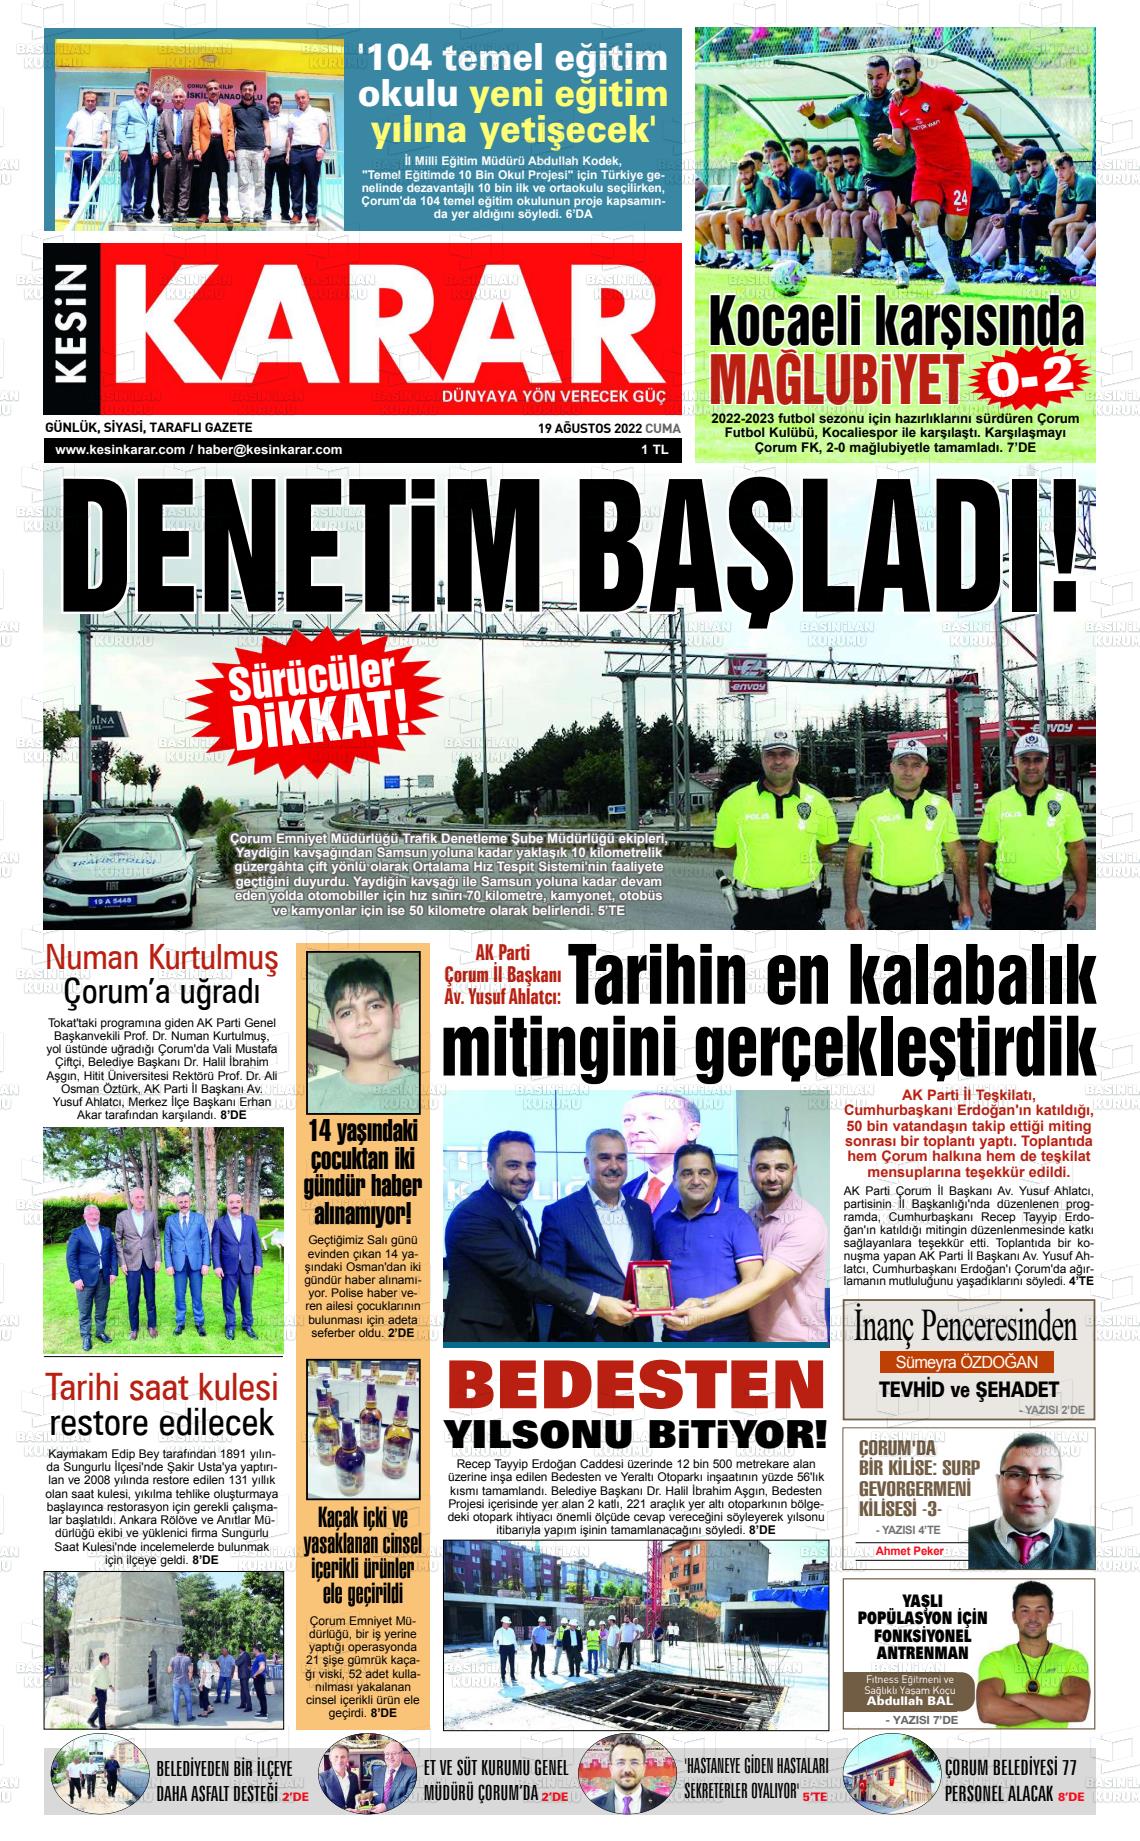 19 Ağustos 2022 Kesin Karar Gazete Manşeti